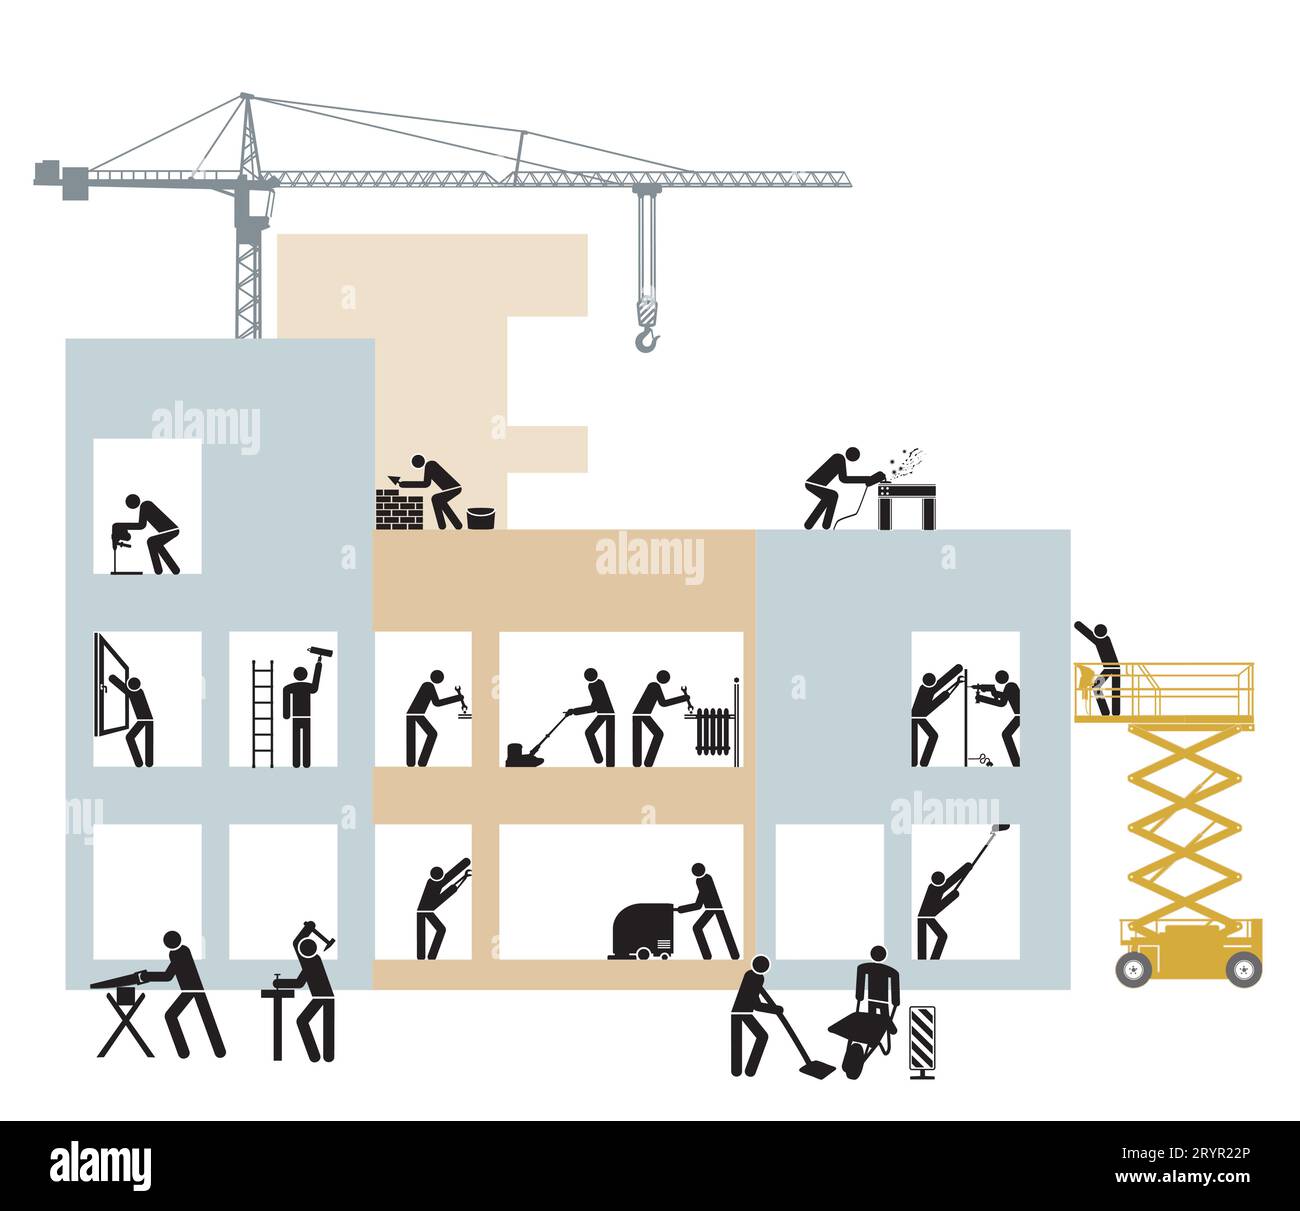 Hausbau Baustelle mit Piktogramm-Illustration der Bauarbeiter Stock Vektor